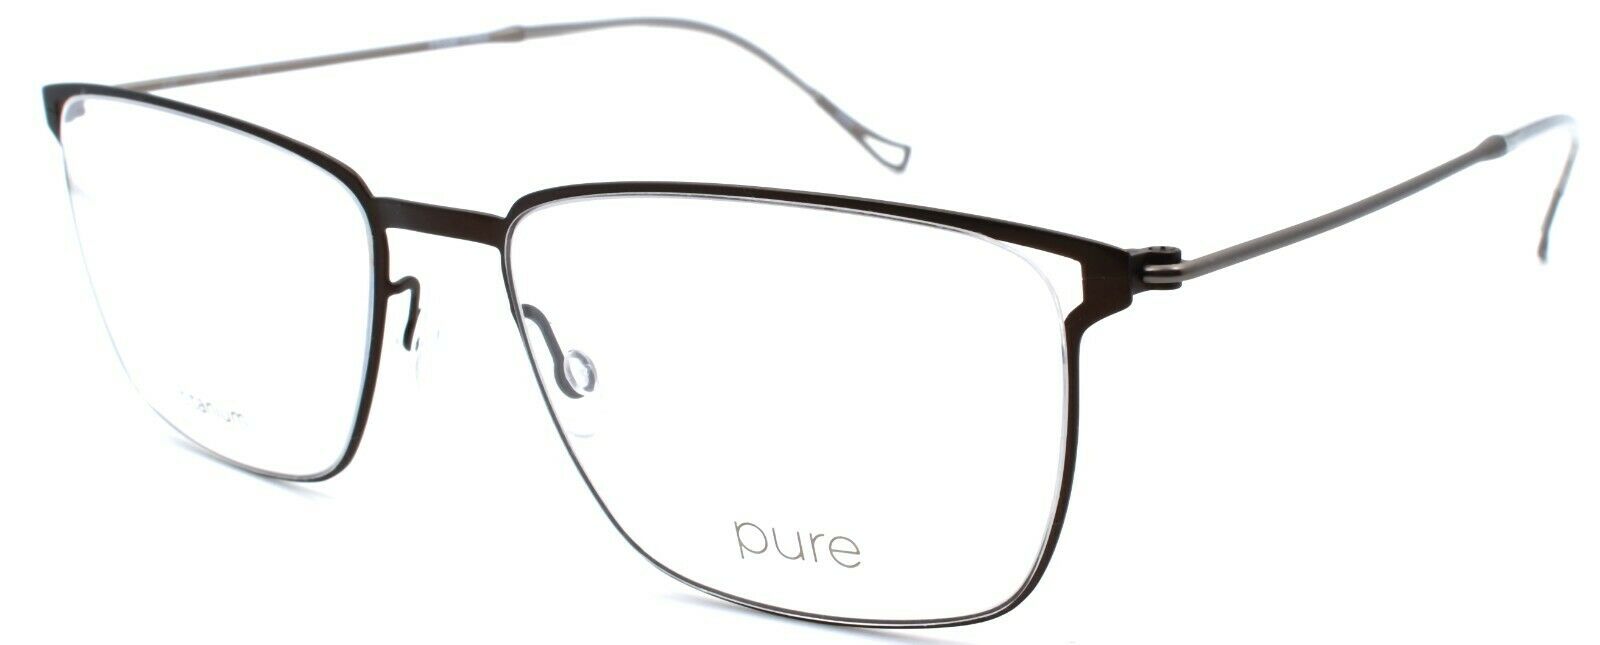 1-Marchon Airlock Pure P-4004 210 Men's Eyeglasses Frames Titanium 54-17-145 Brown-886895473125-IKSpecs